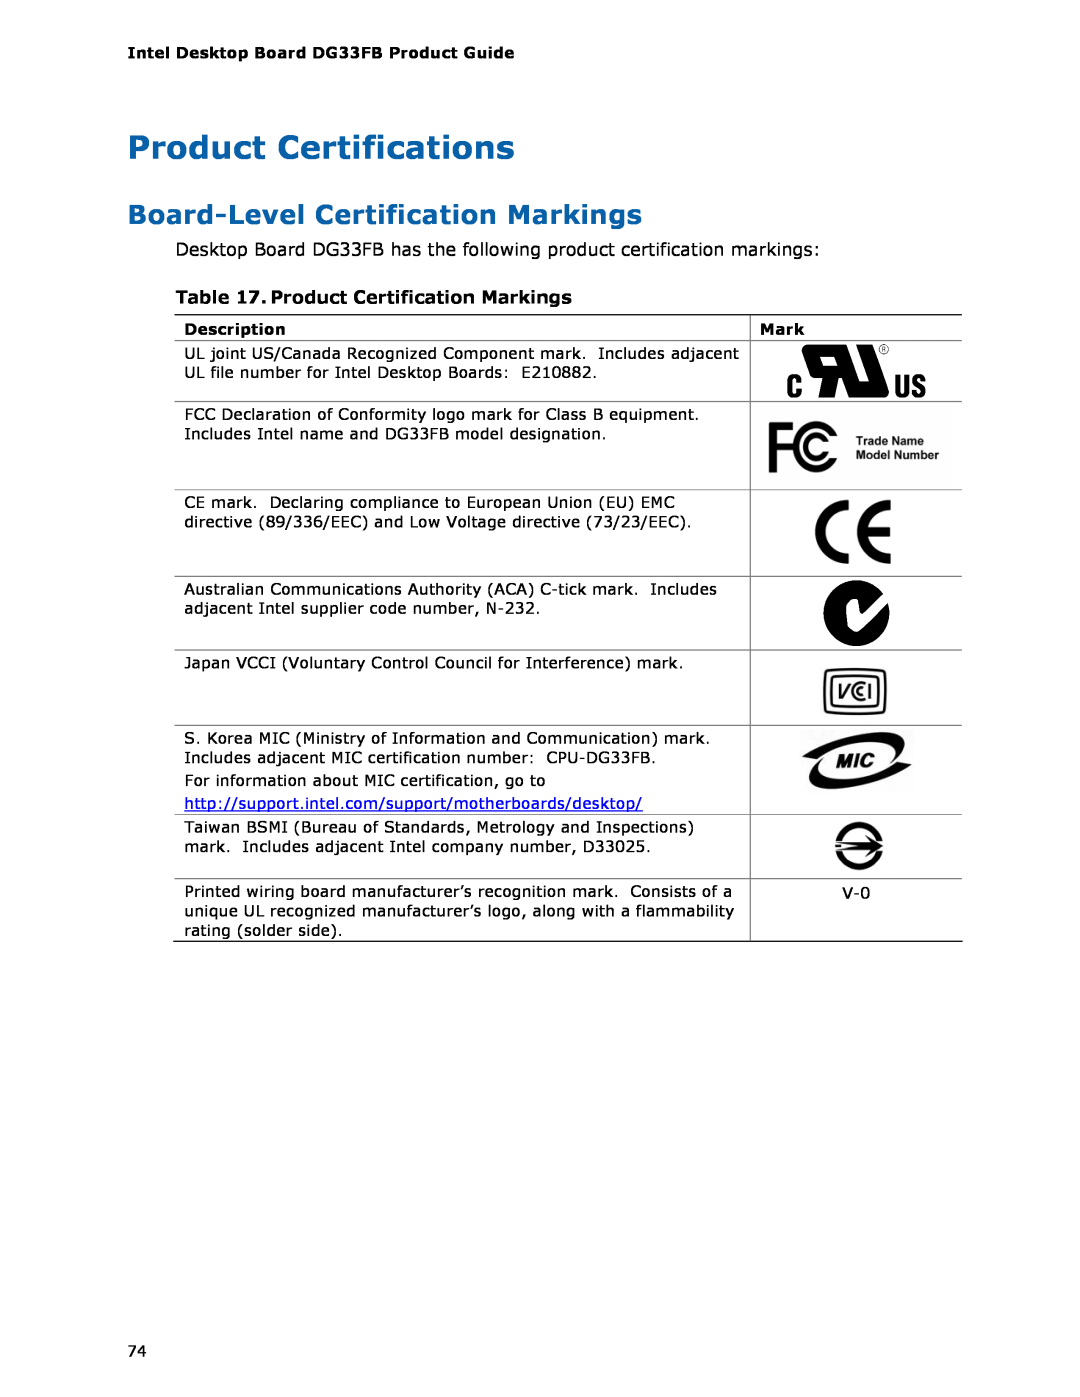 Intel DG33FB manual Product Certifications, Board-LevelCertification Markings, Product Certification Markings 